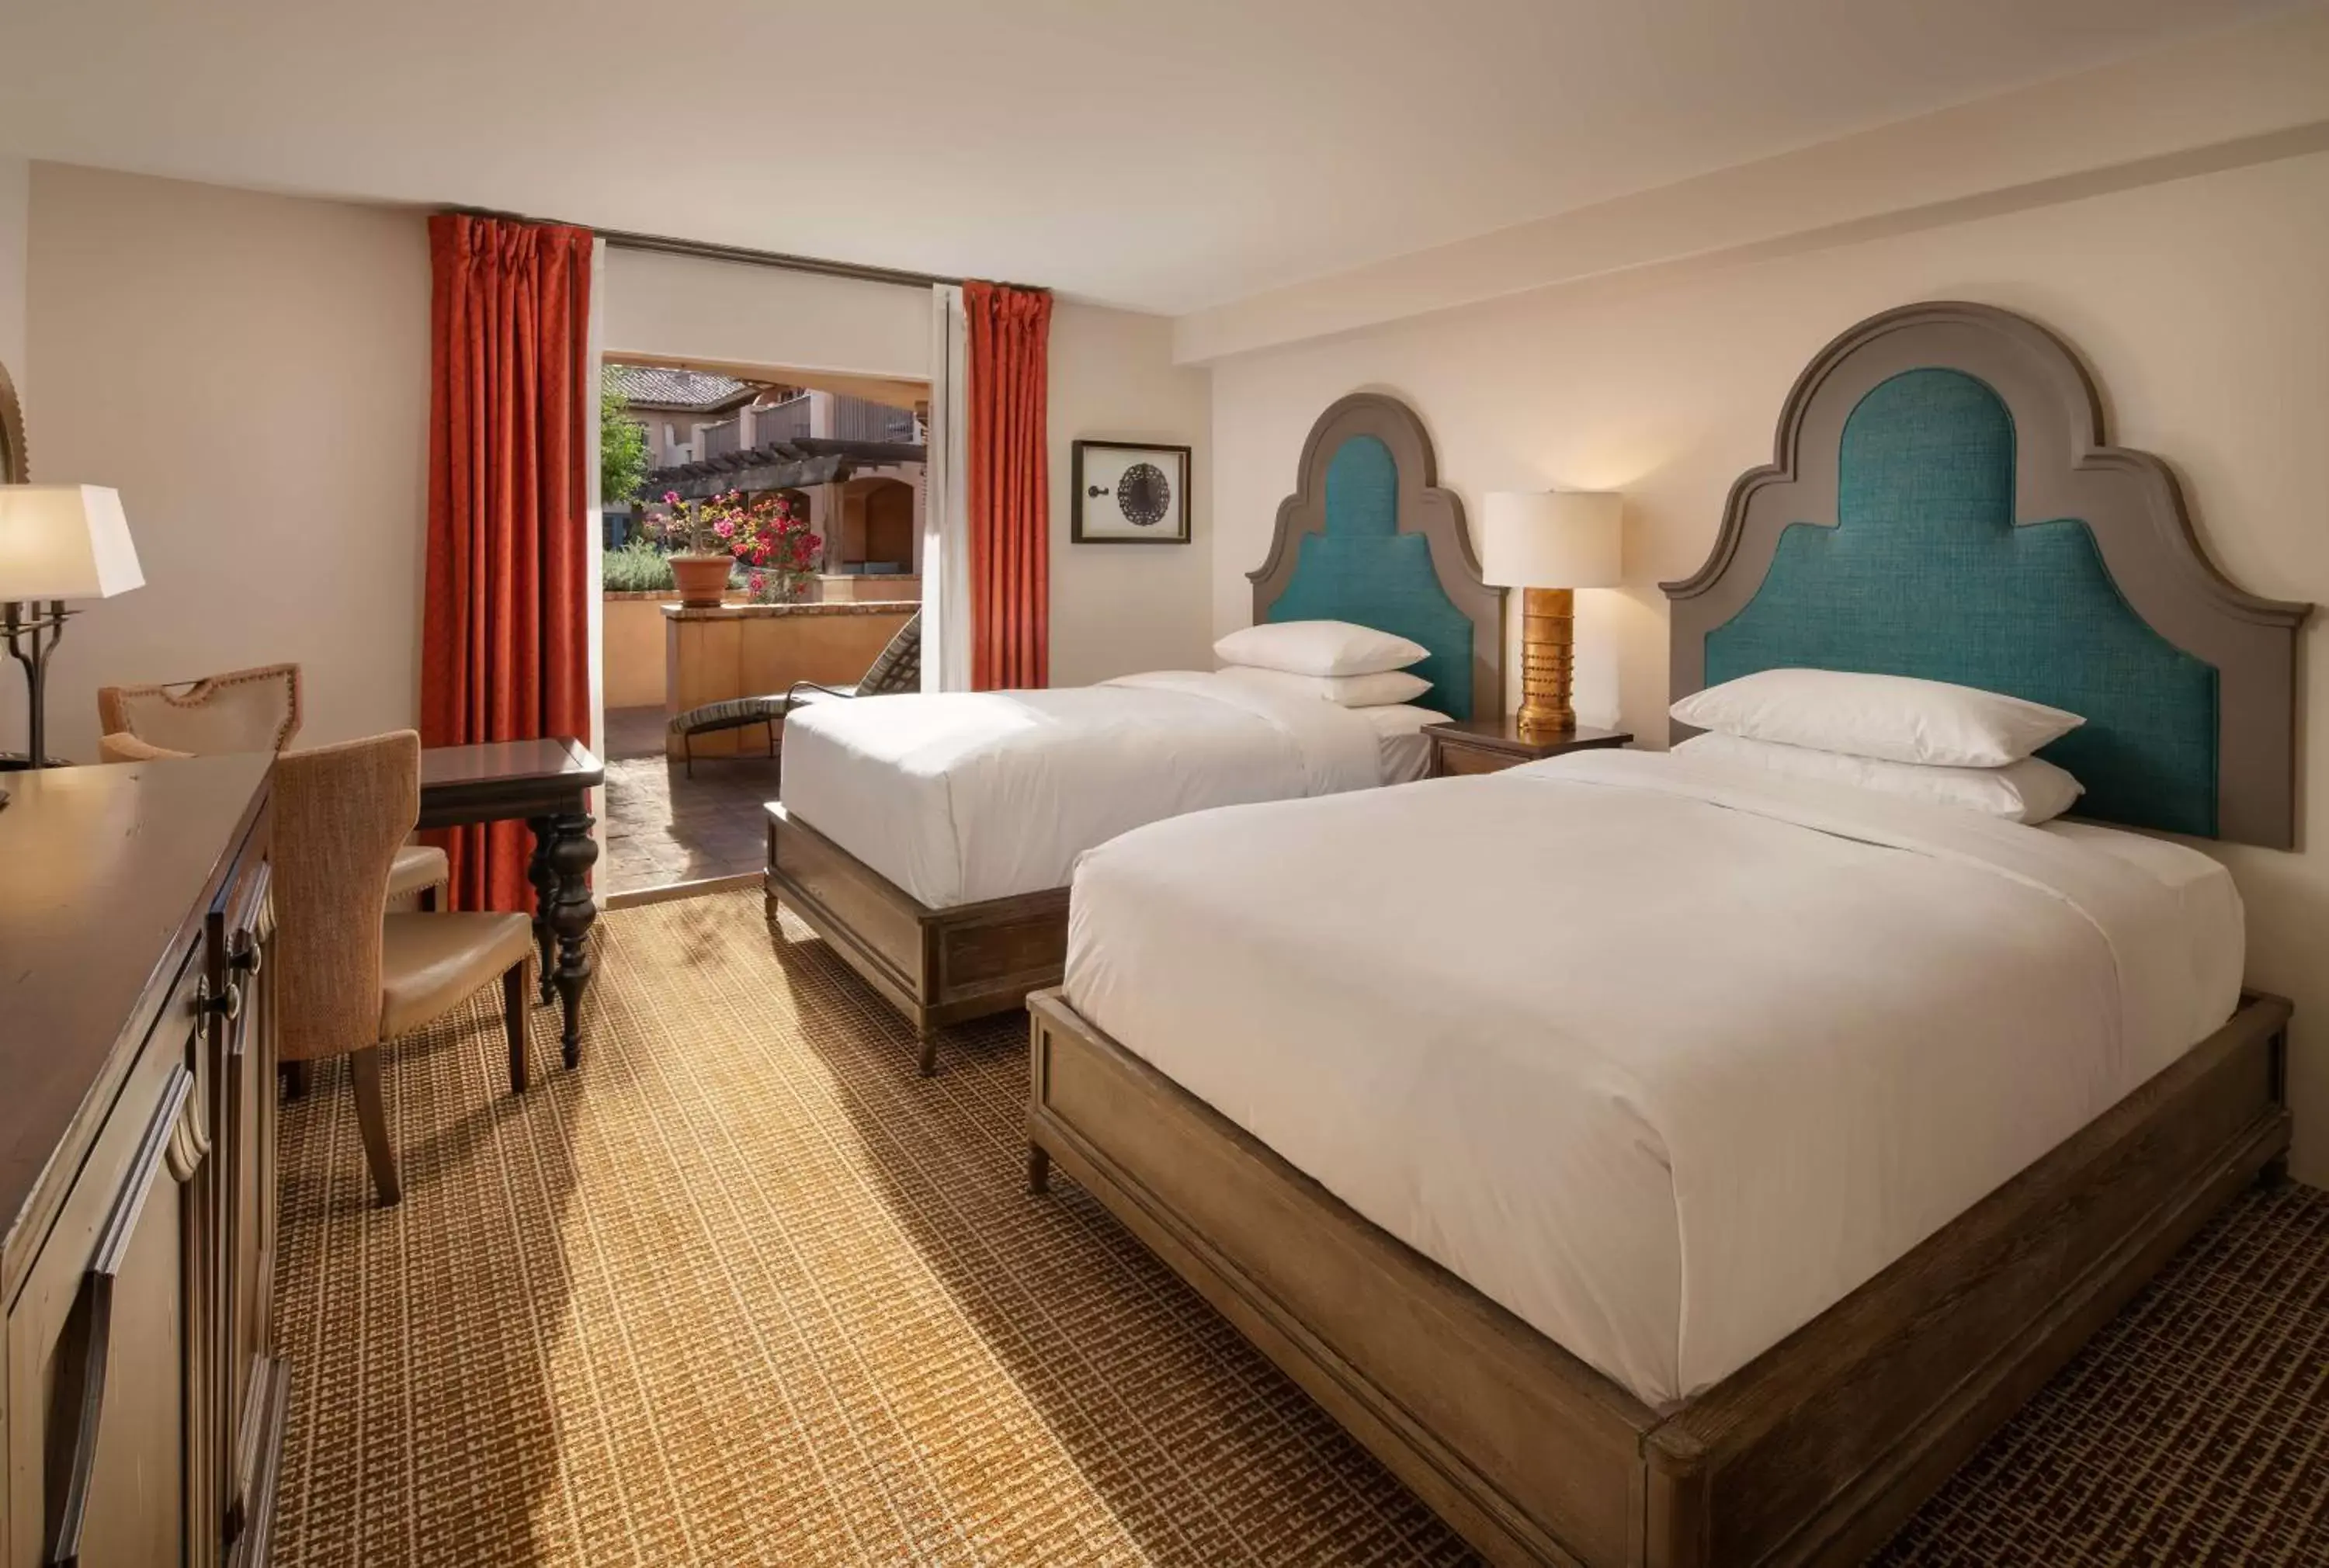 Bedroom in Royal Palms Resort and Spa, part of Hyatt